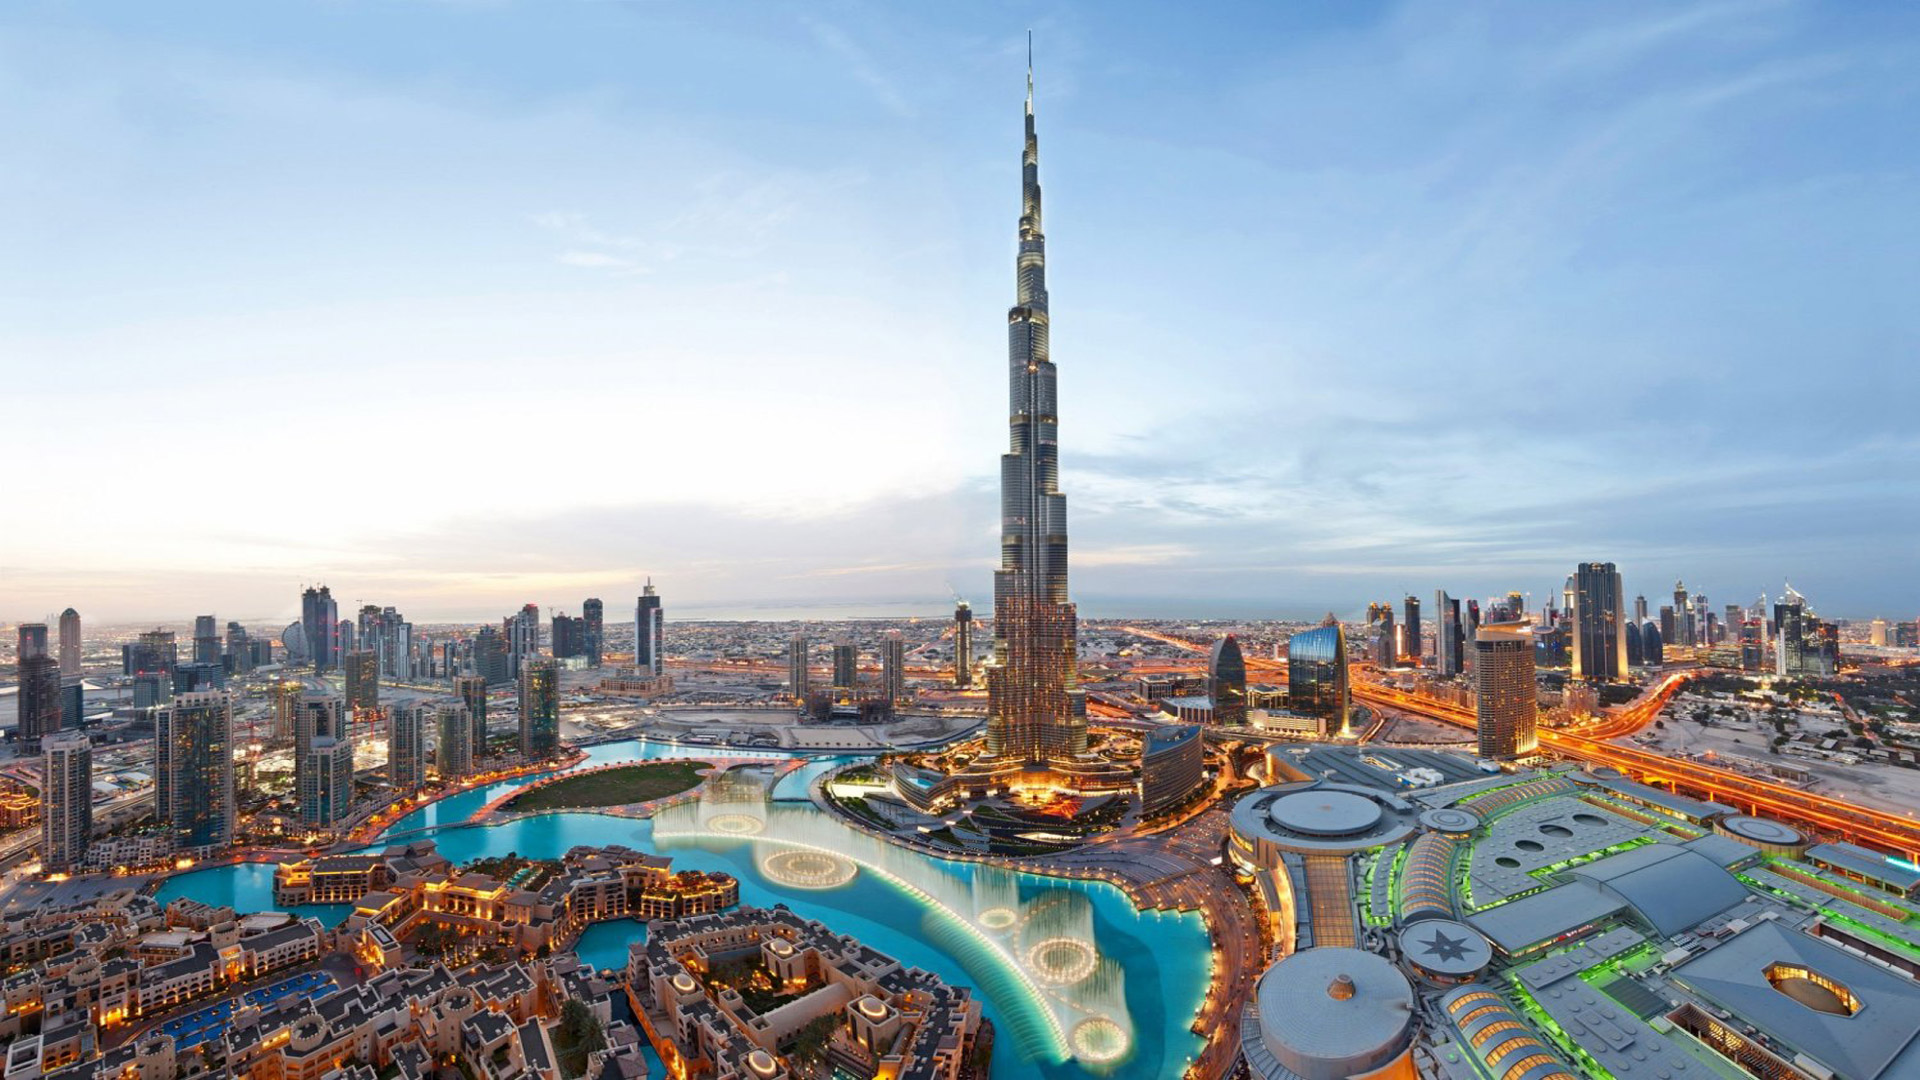 VIDA RESIDENCE DOWNTOWN by Emaar Properties in Downtown Dubai, Dubai, UAE - 2